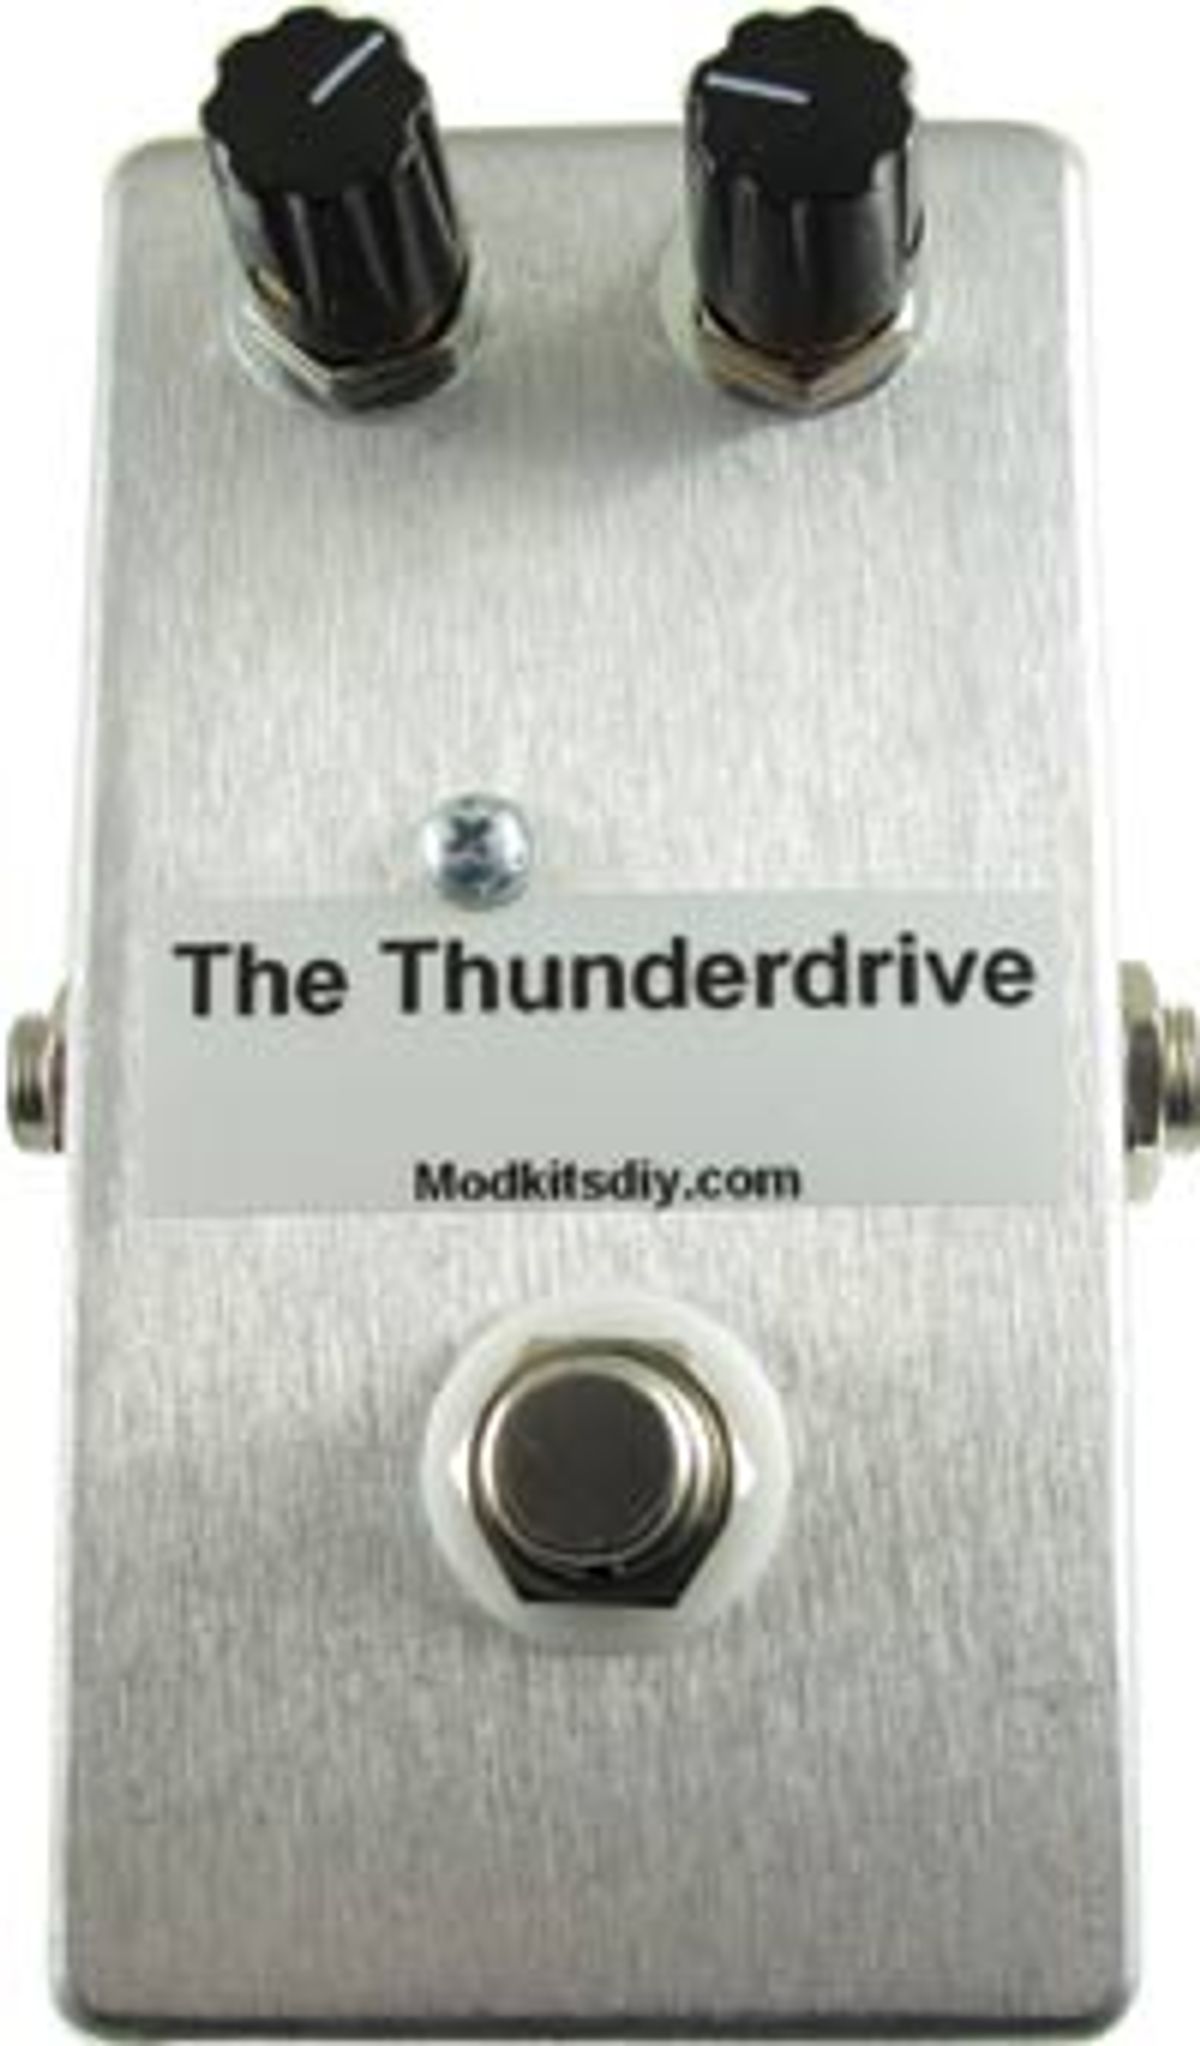 Mod Kits DIY Releases the Thunderdrive Pedal Kit